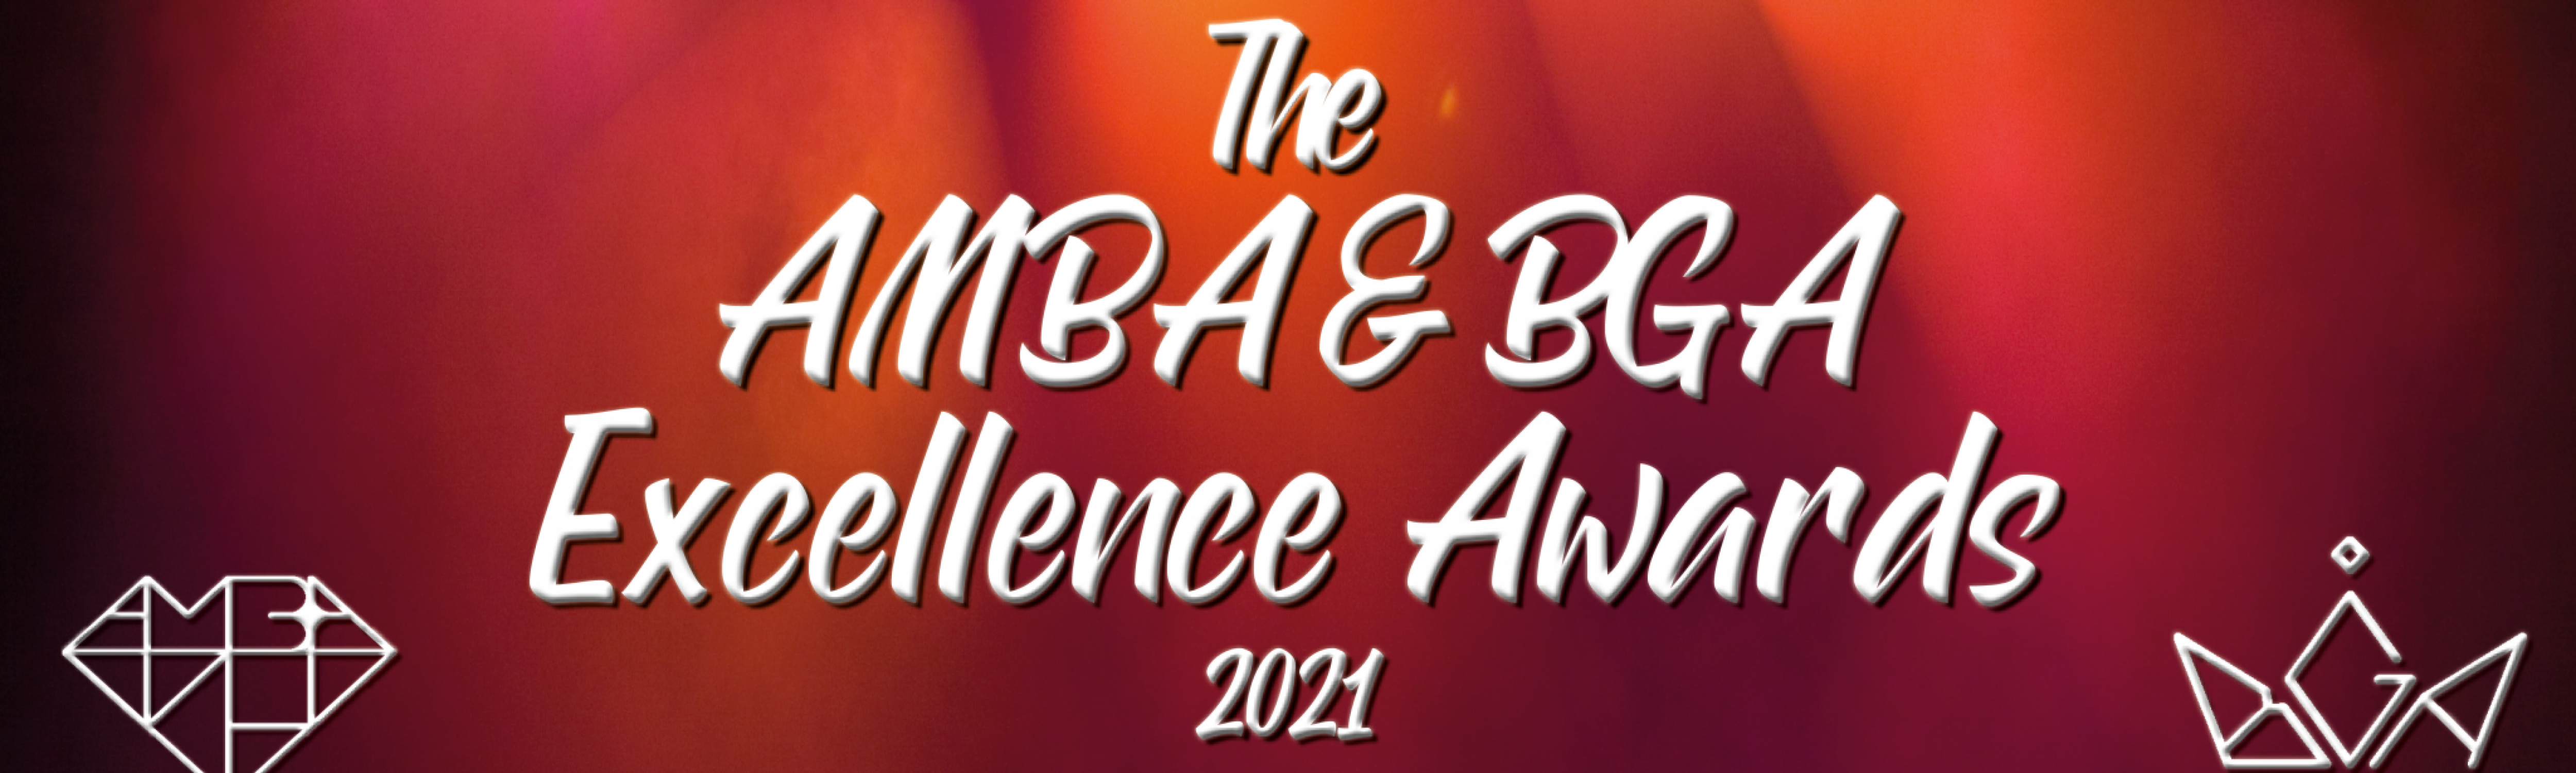 AMBA & BGA Excellence Awards 2021